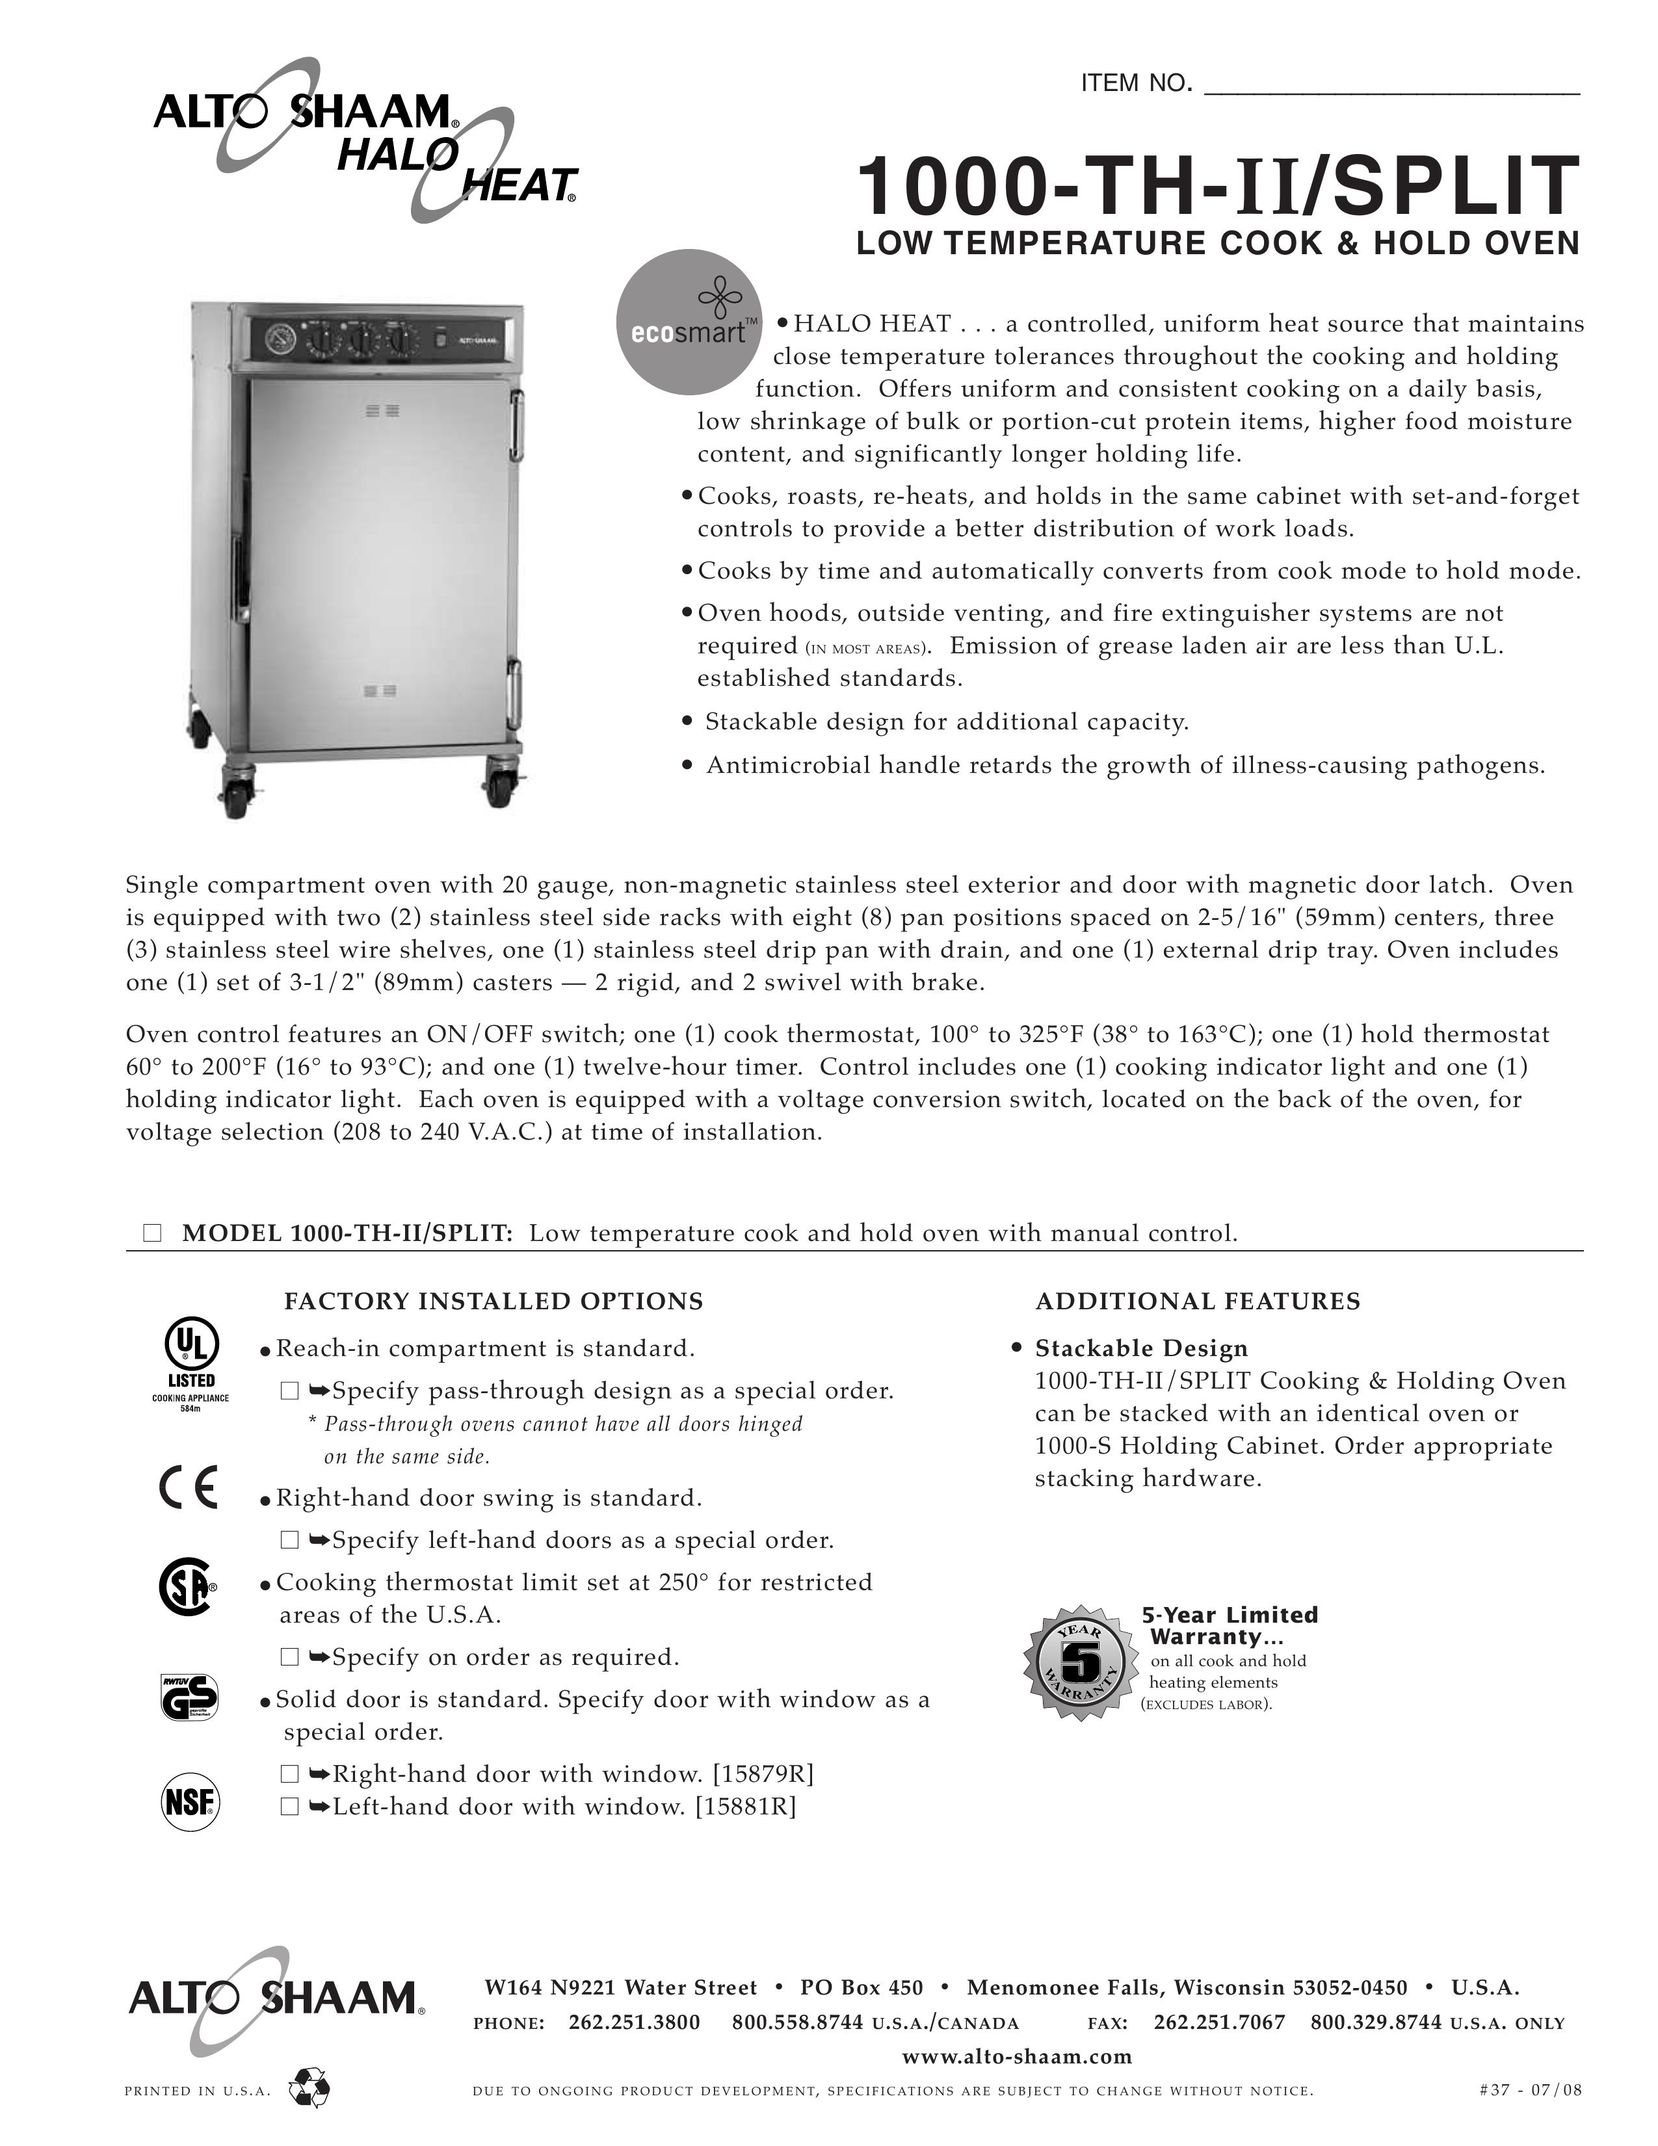 Alto-Shaam 1000-TH-II/Spilt Oven User Manual